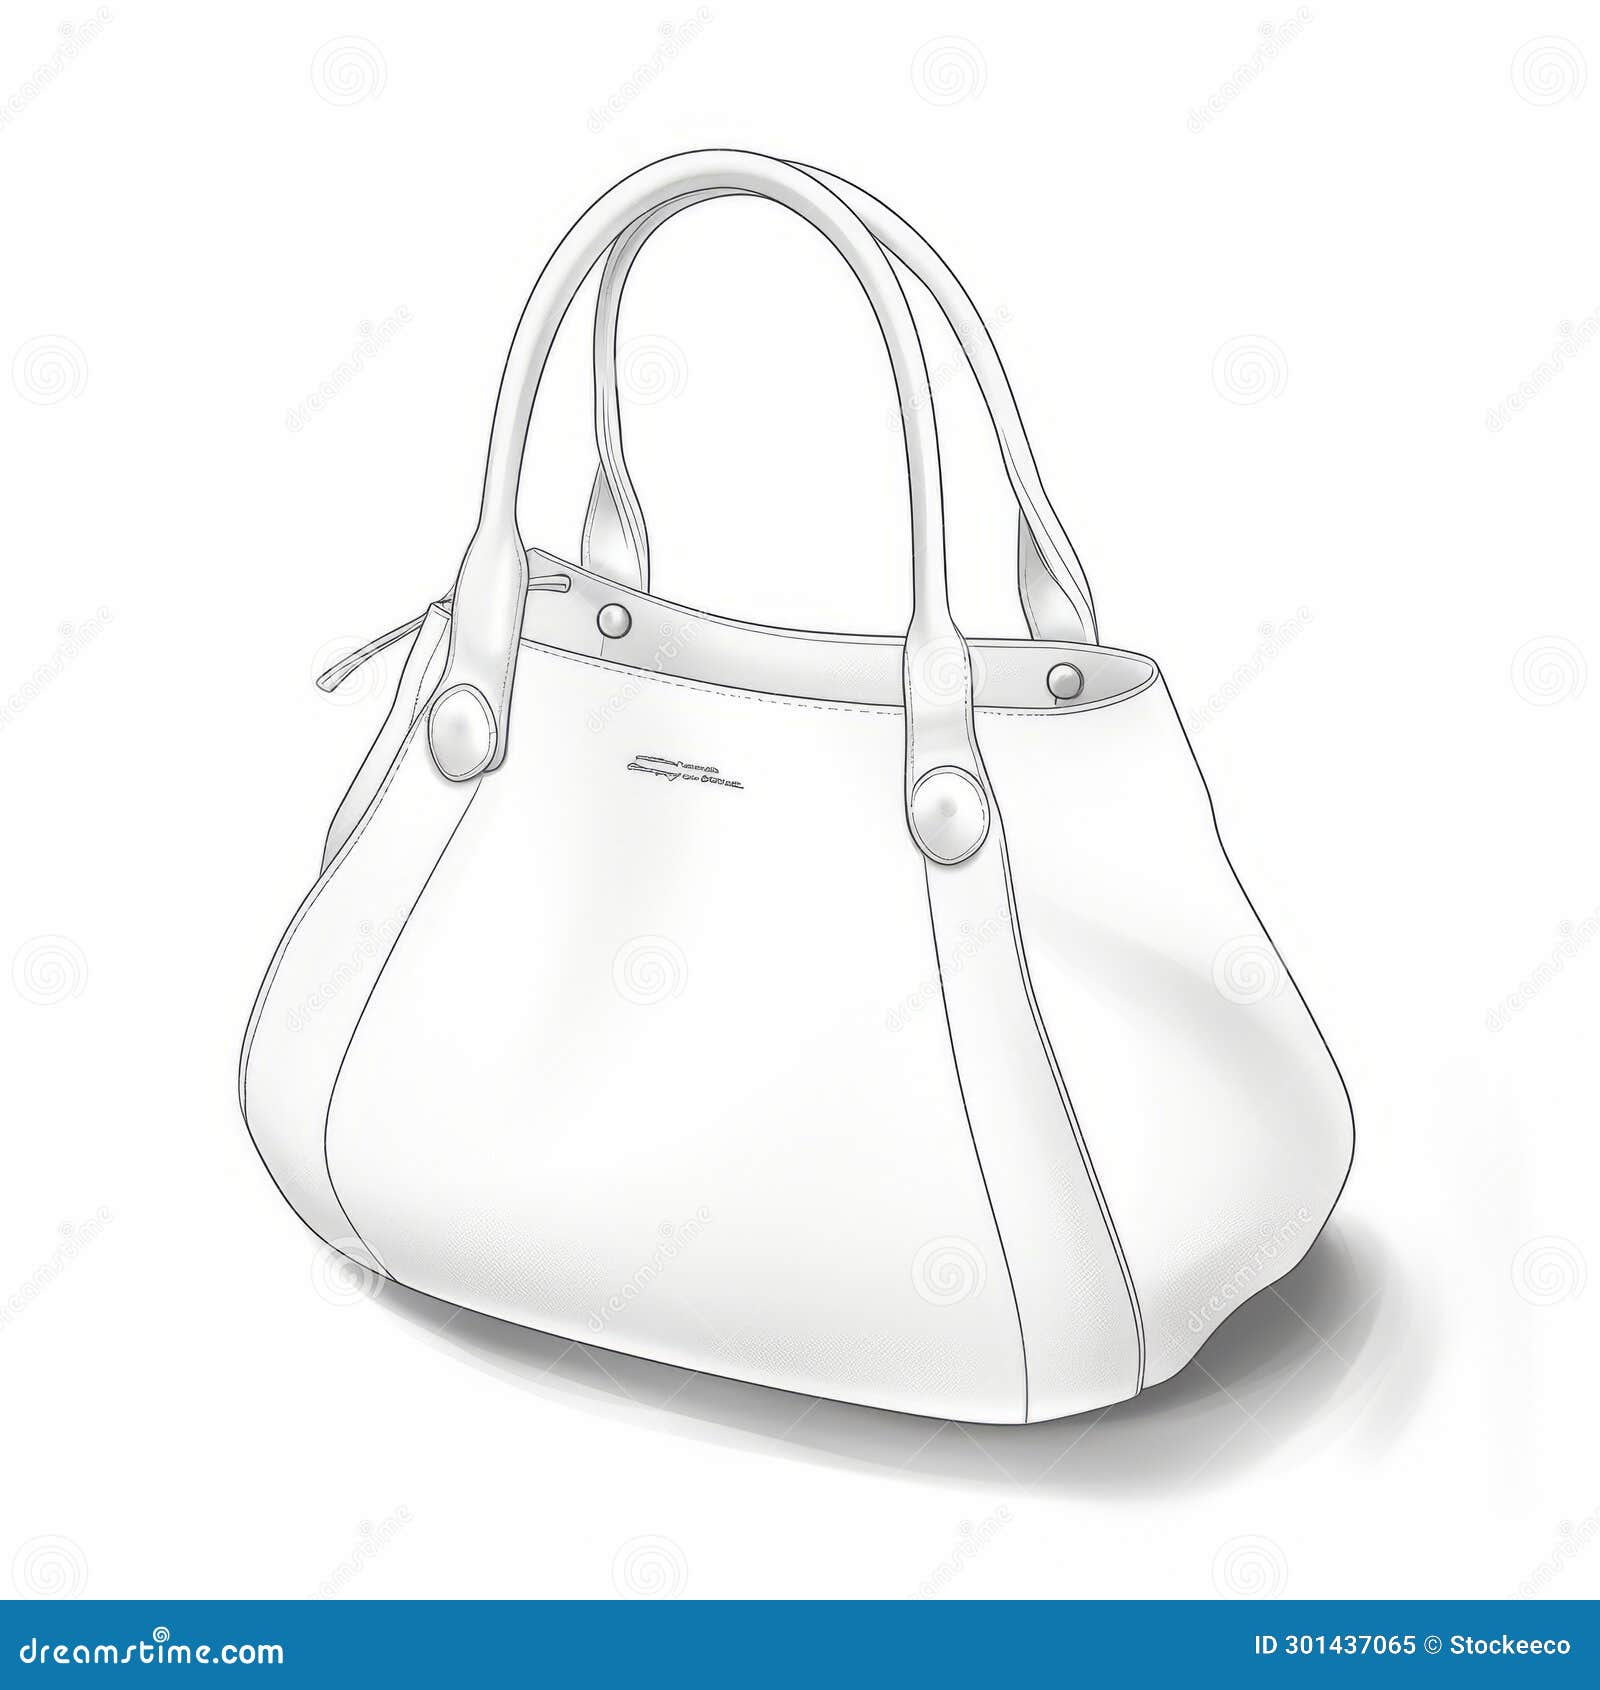 20 Clutch Purse Drawing #purseideas #diypurse #purse | Bag illustration, Drawing  bag, Purses and handbags